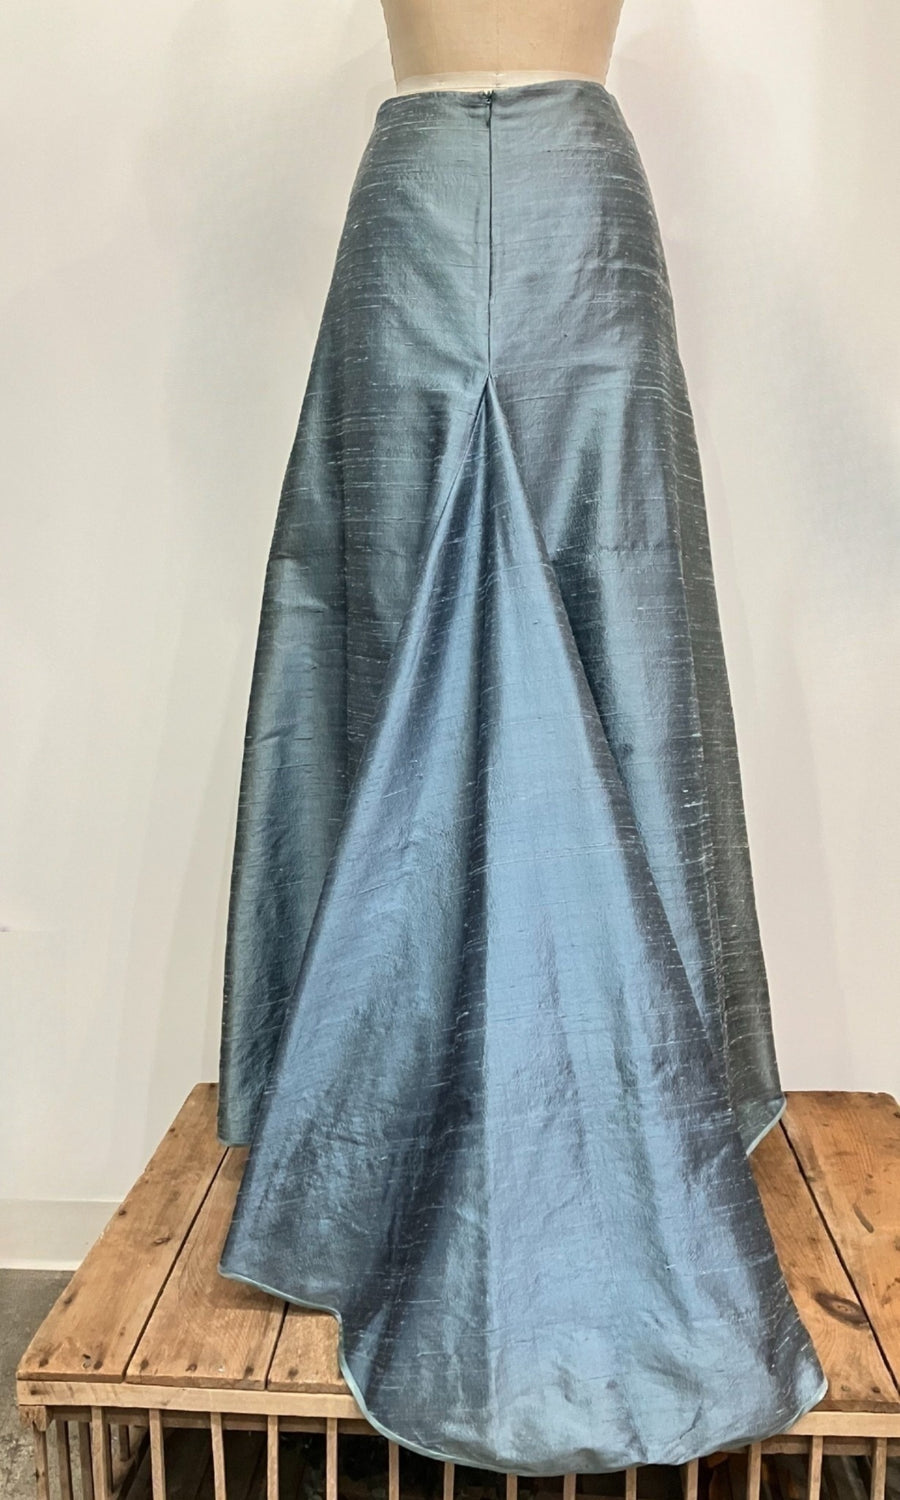 Slate Blue Fishtail Skirt, size Small